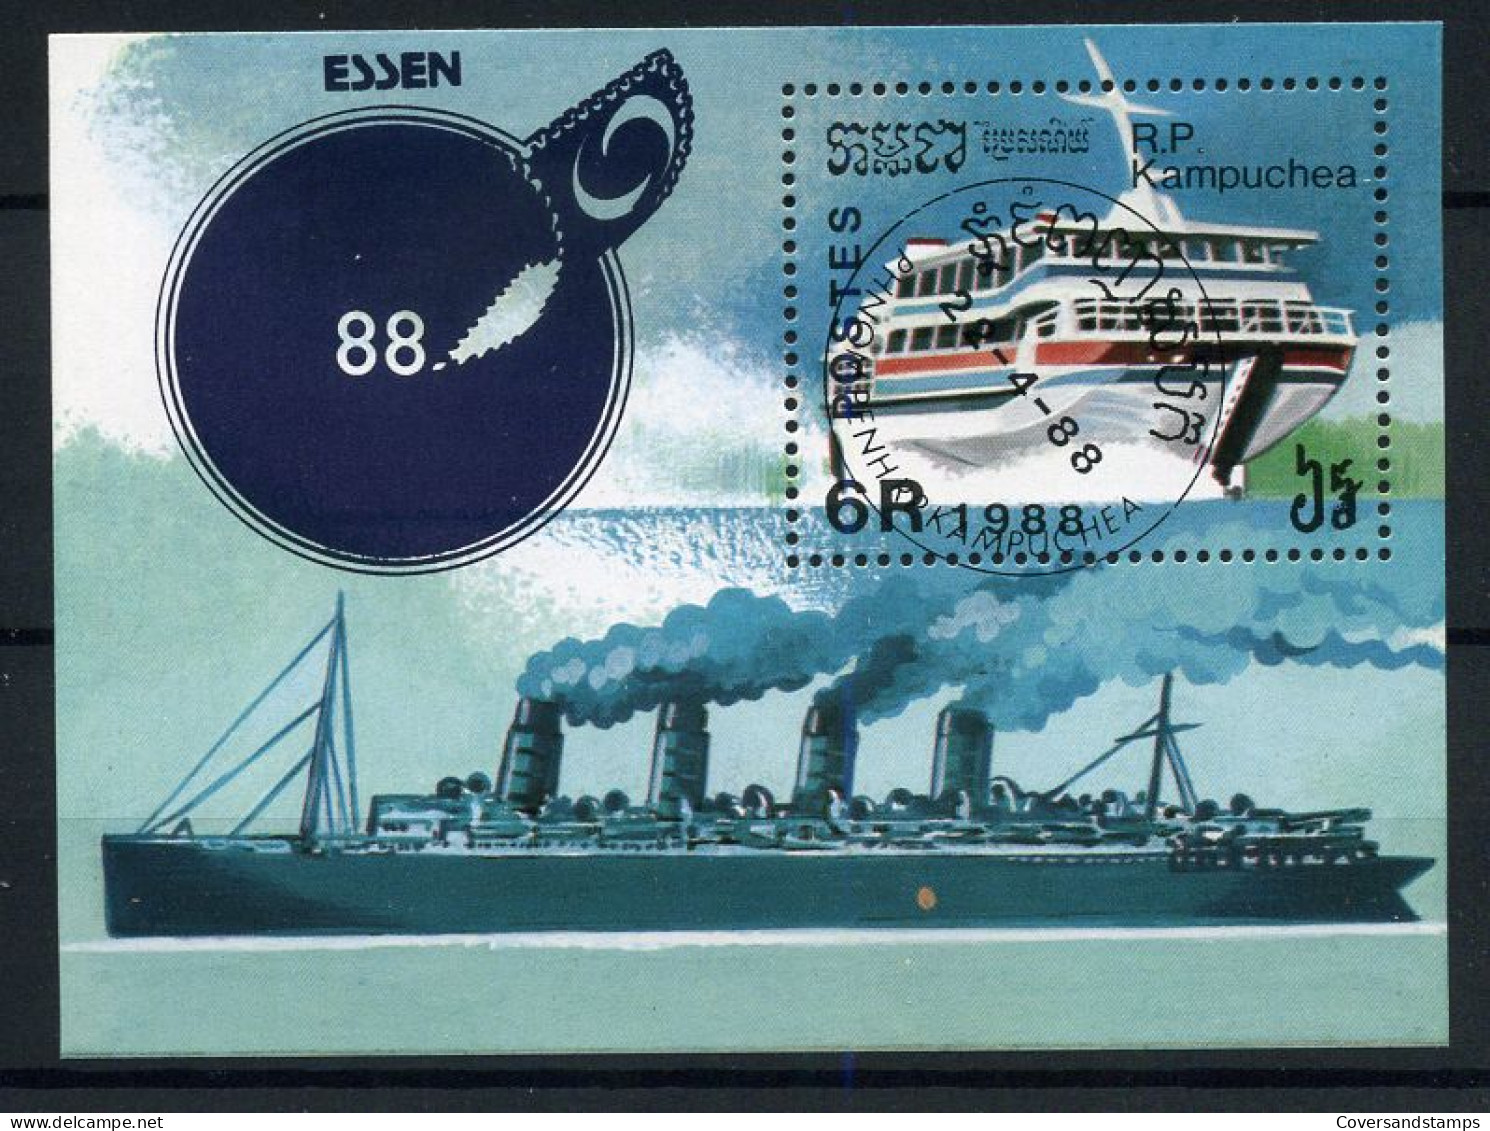 Kampuchea - Essen '88 - Boat - Ships